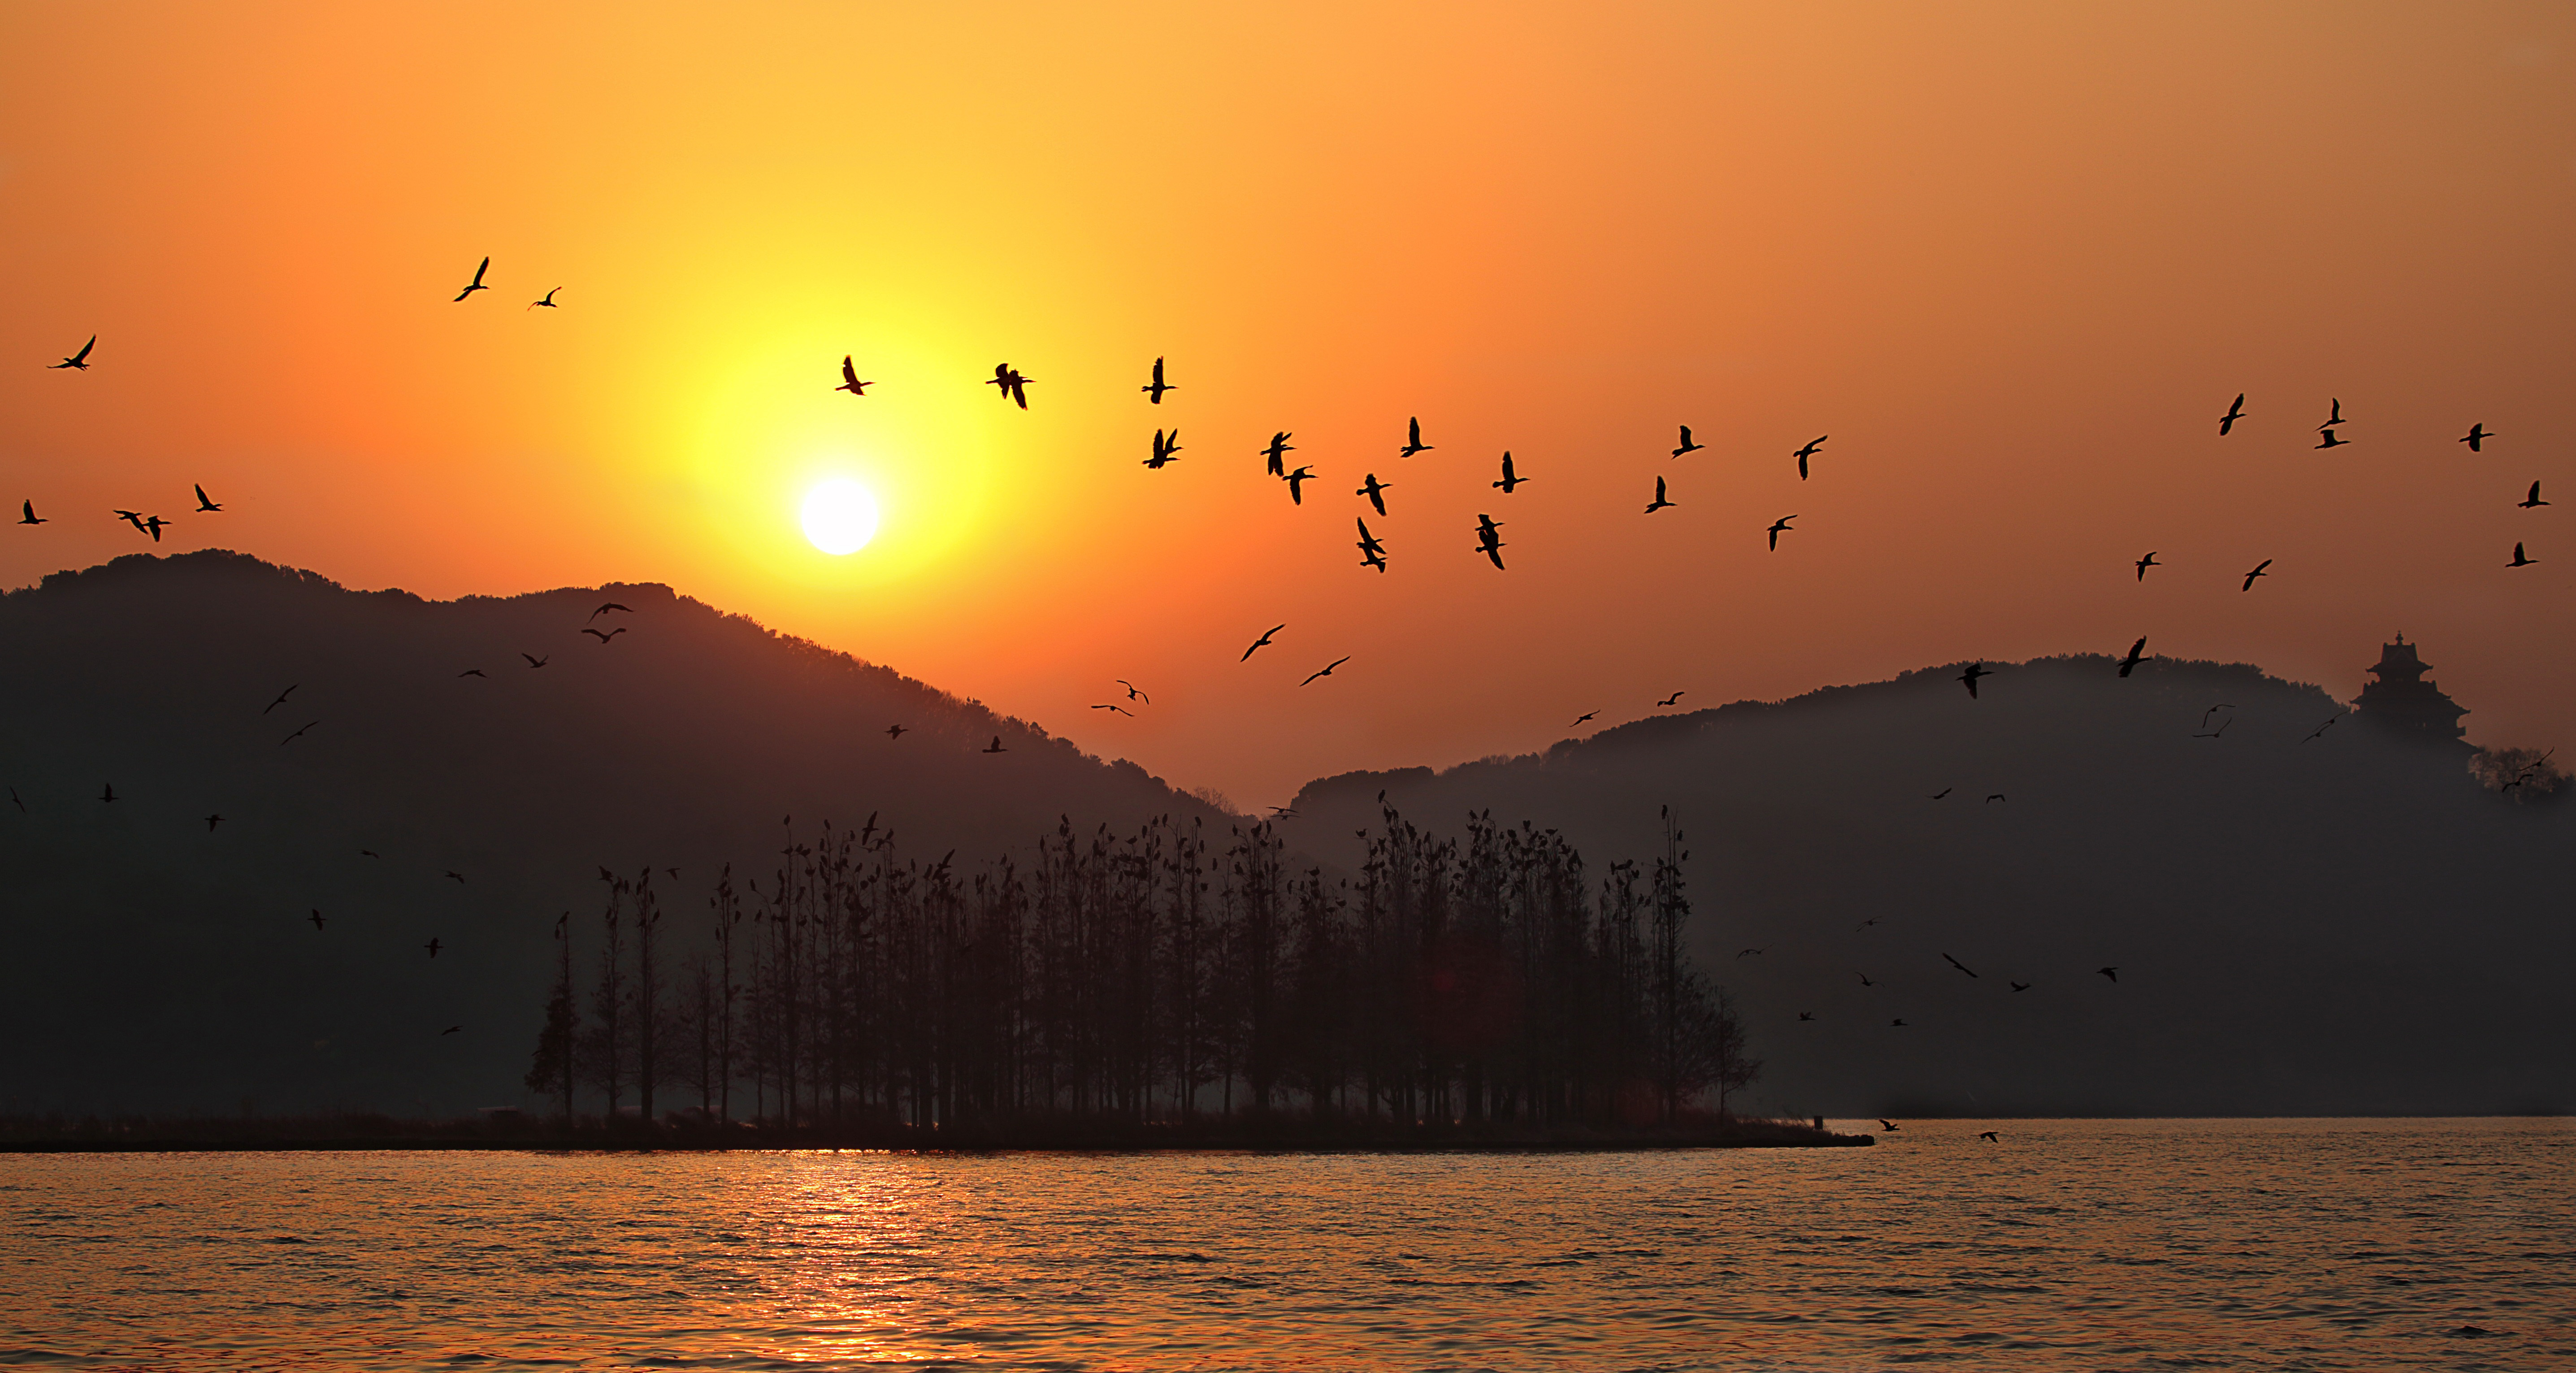 Birds flying over sunset over east lake image - Free stock photo - Public  Domain photo - CC0 Images